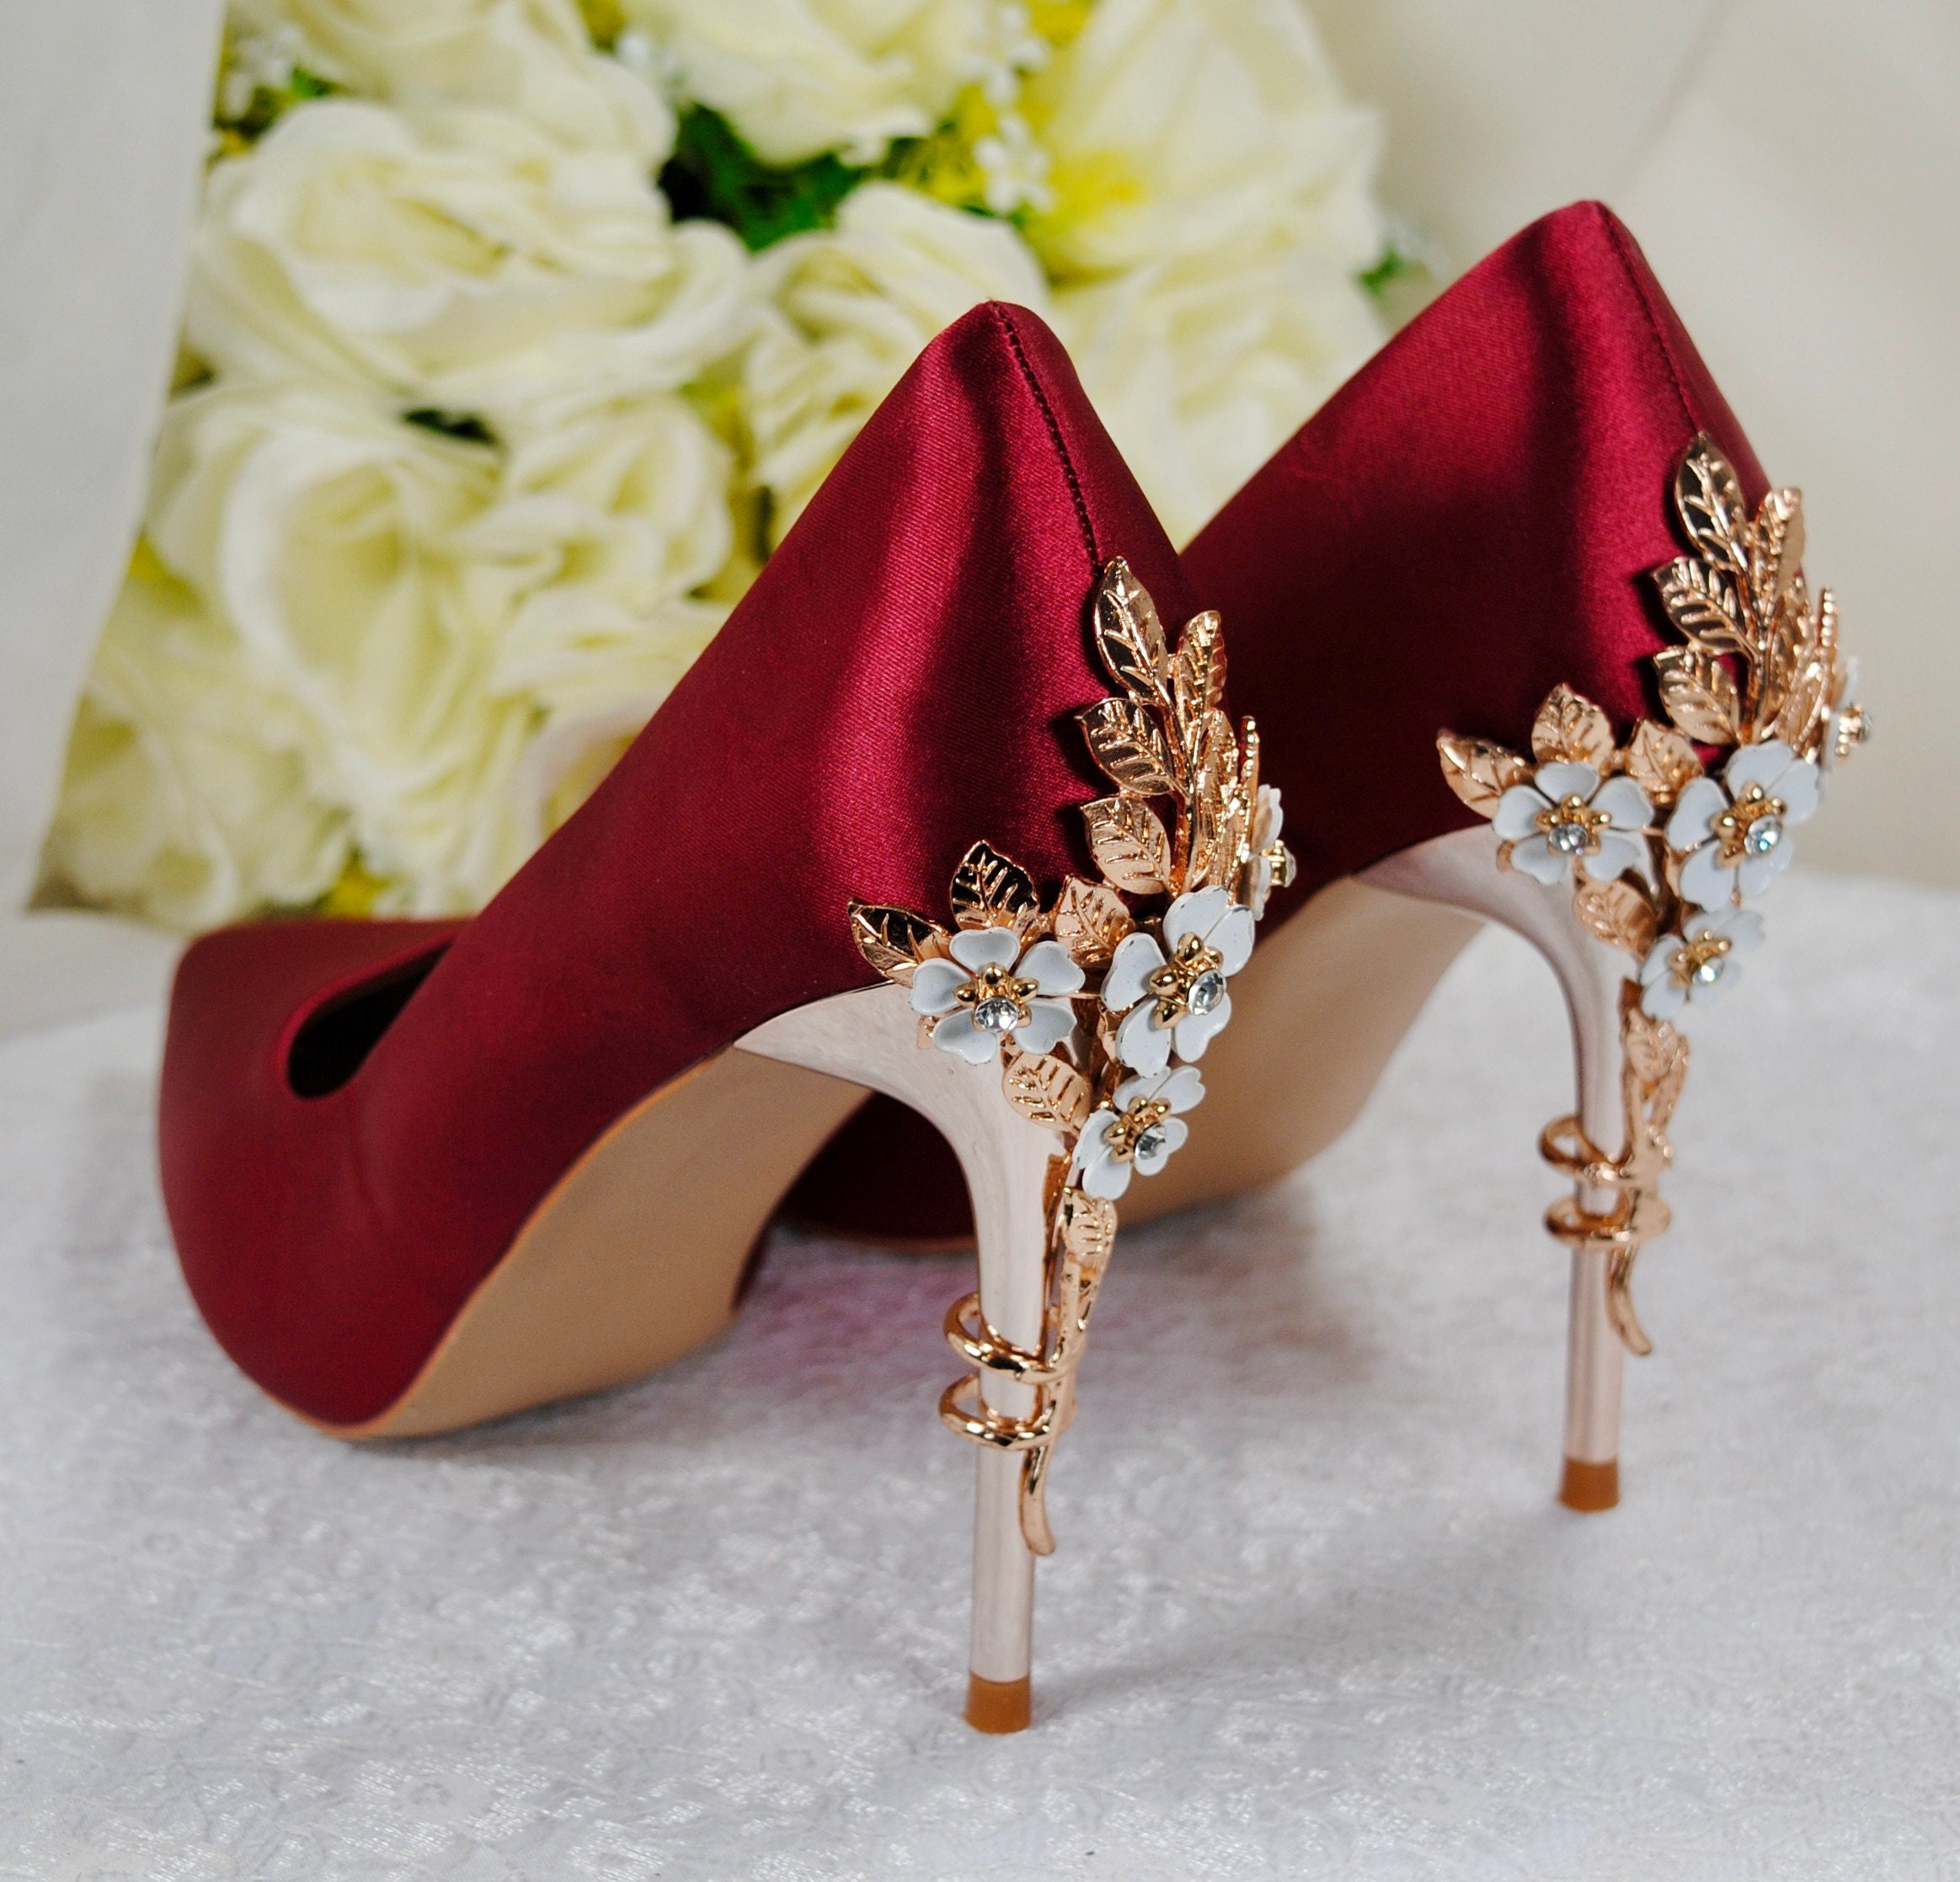 Photo of Sparkly heels against bridal lehenga